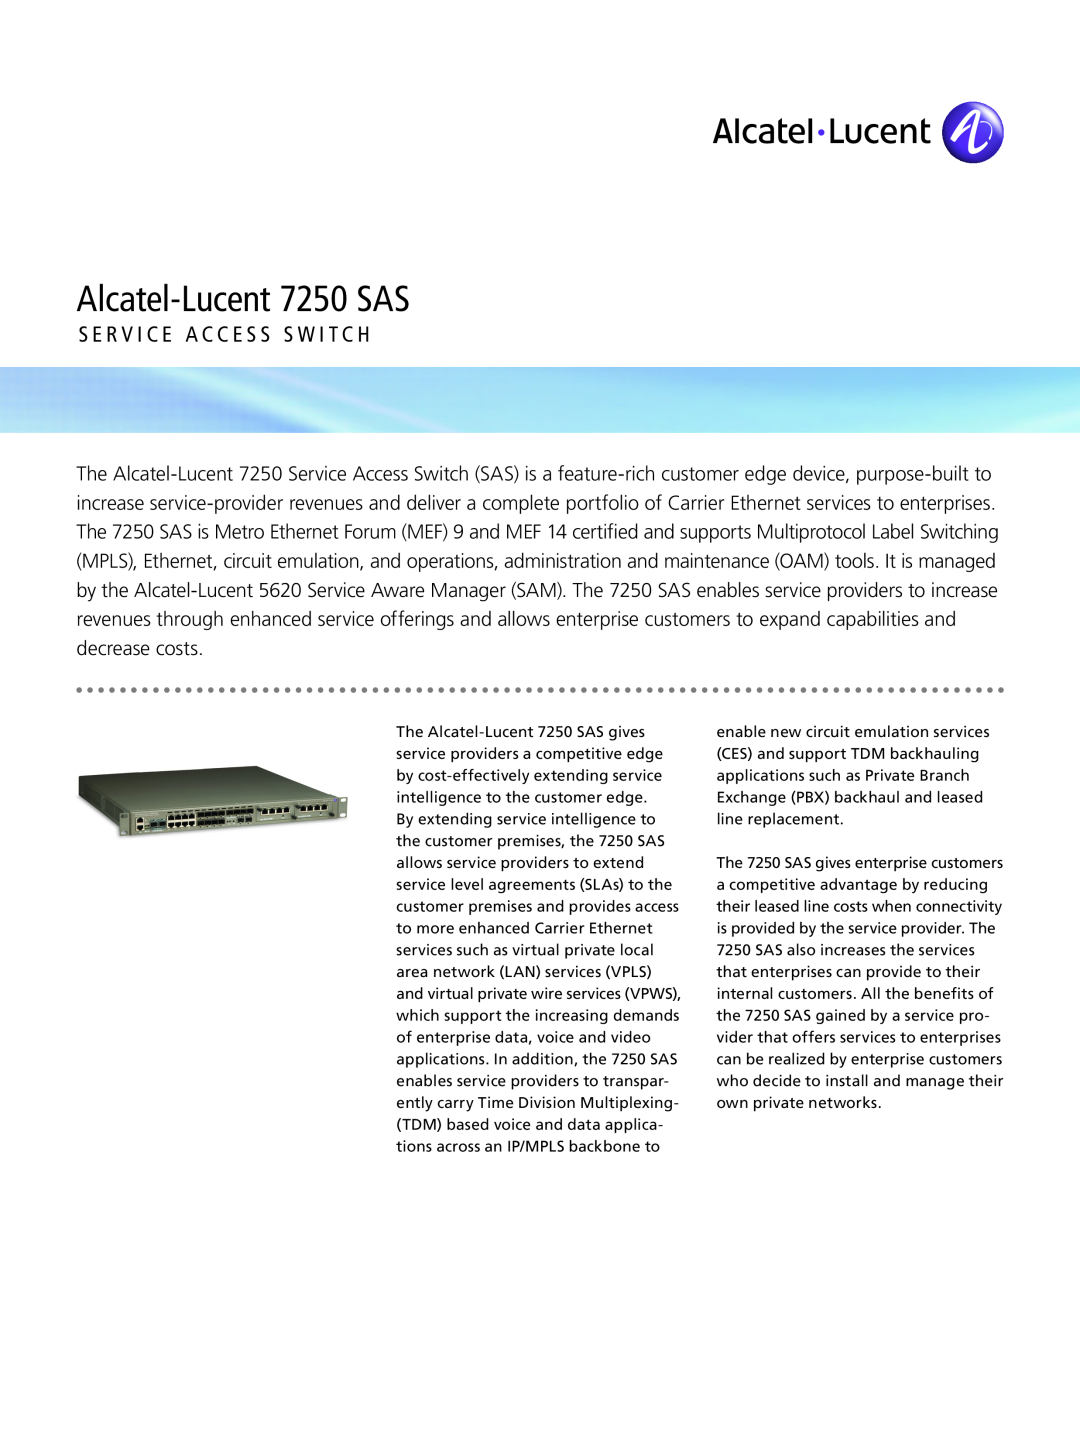 Alcatel-Lucent manual Alcatel-Lucent 7250 SAS, S E R V I C E A C C E S S S W I T C H 